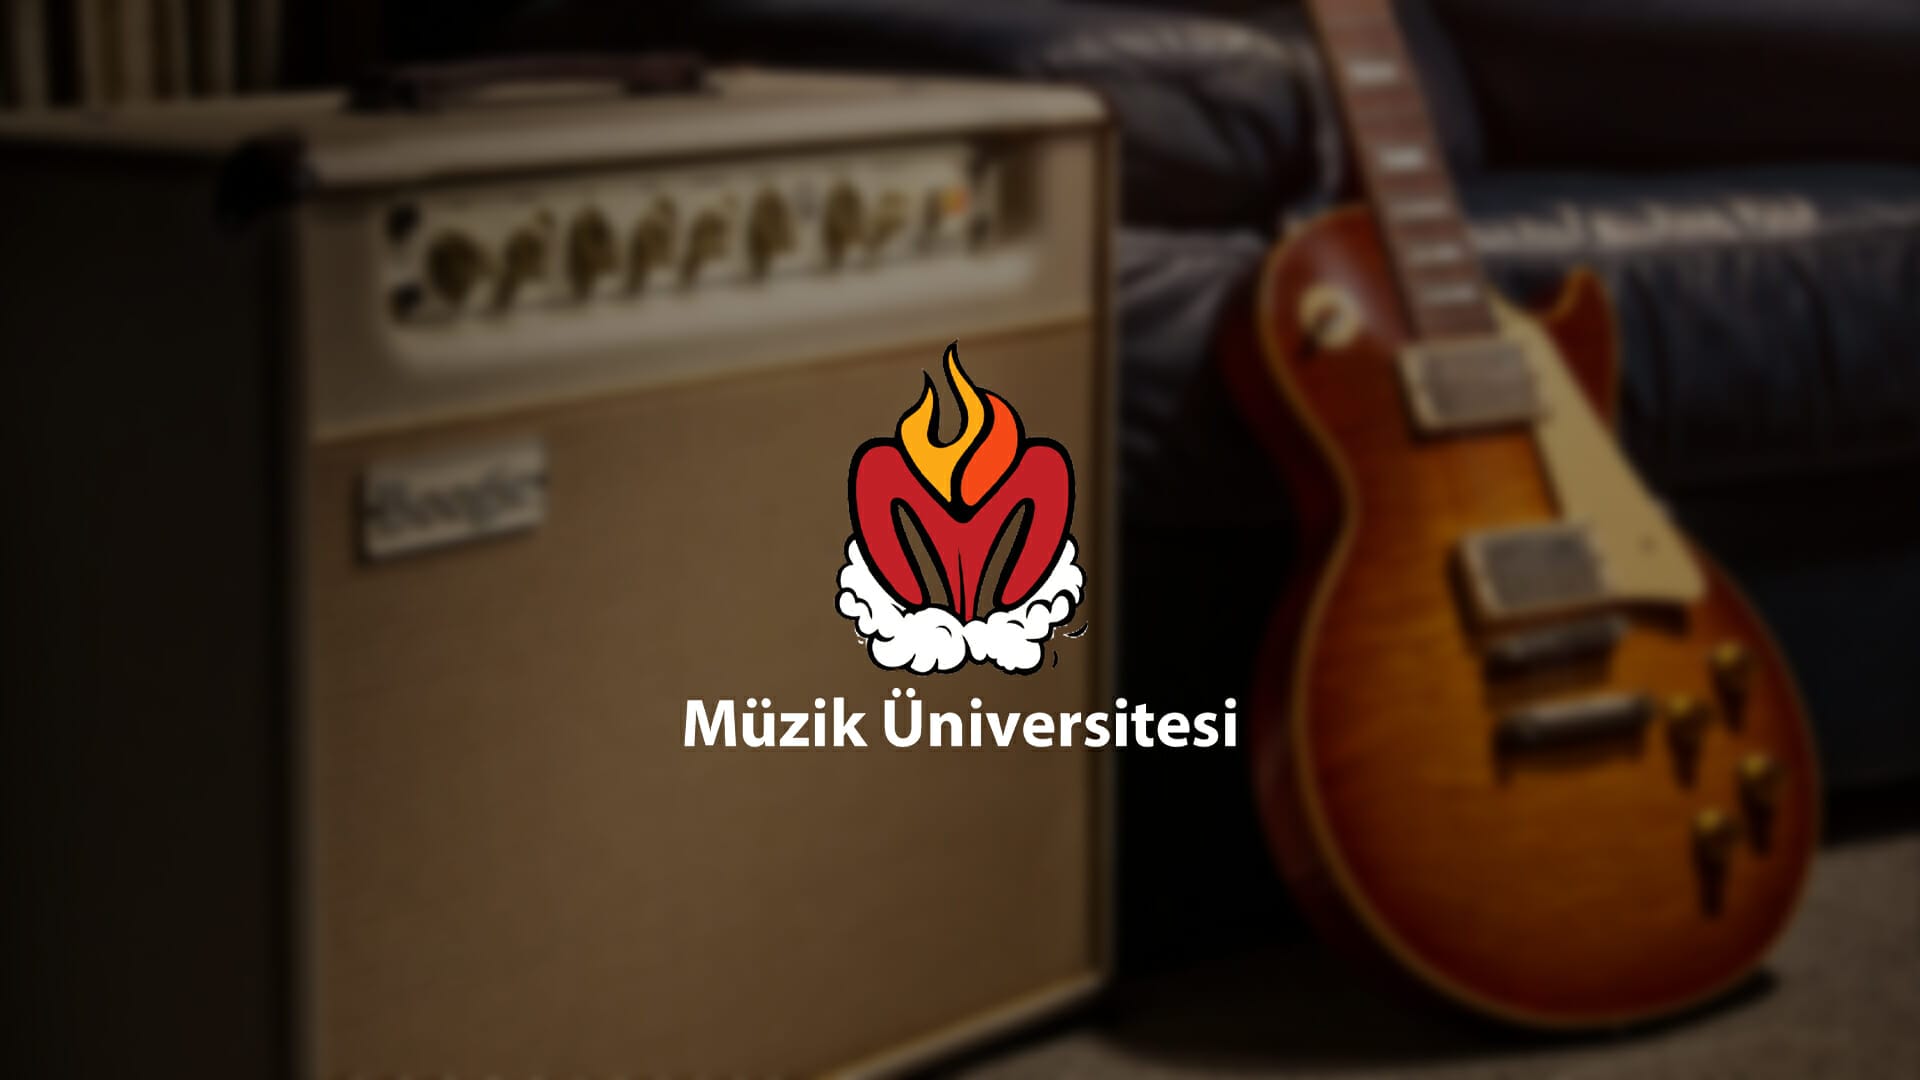 www.muzikuniversitesi.com